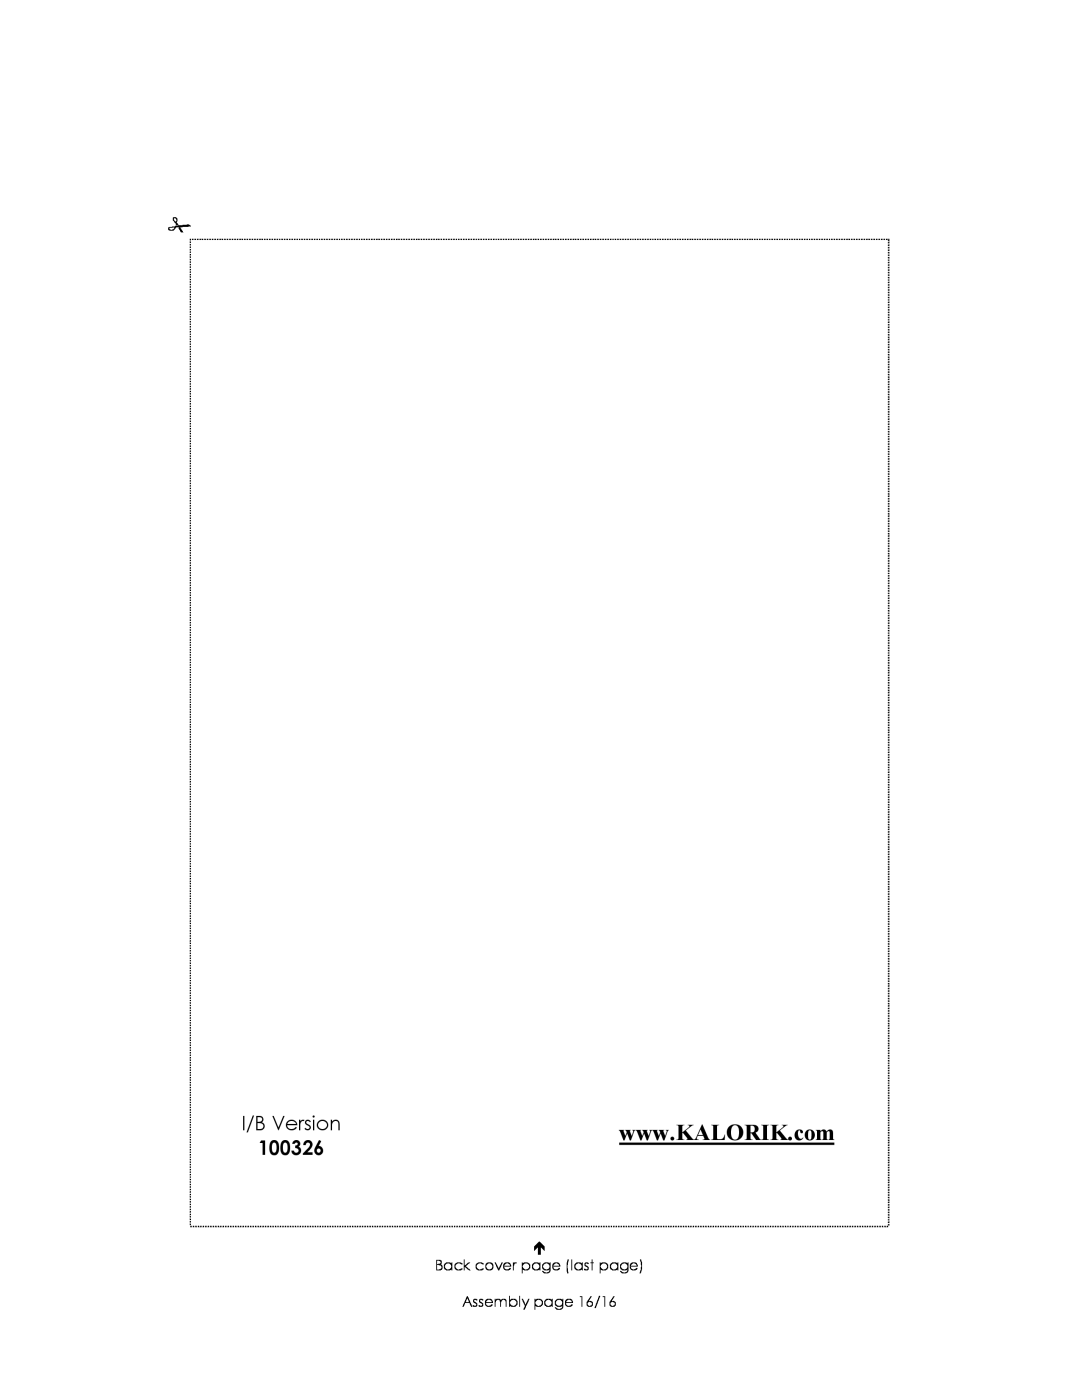 Kalorik USK DGR 31031 manual 100326, I/B Version, Back cover page last page Assembly page 16/16 